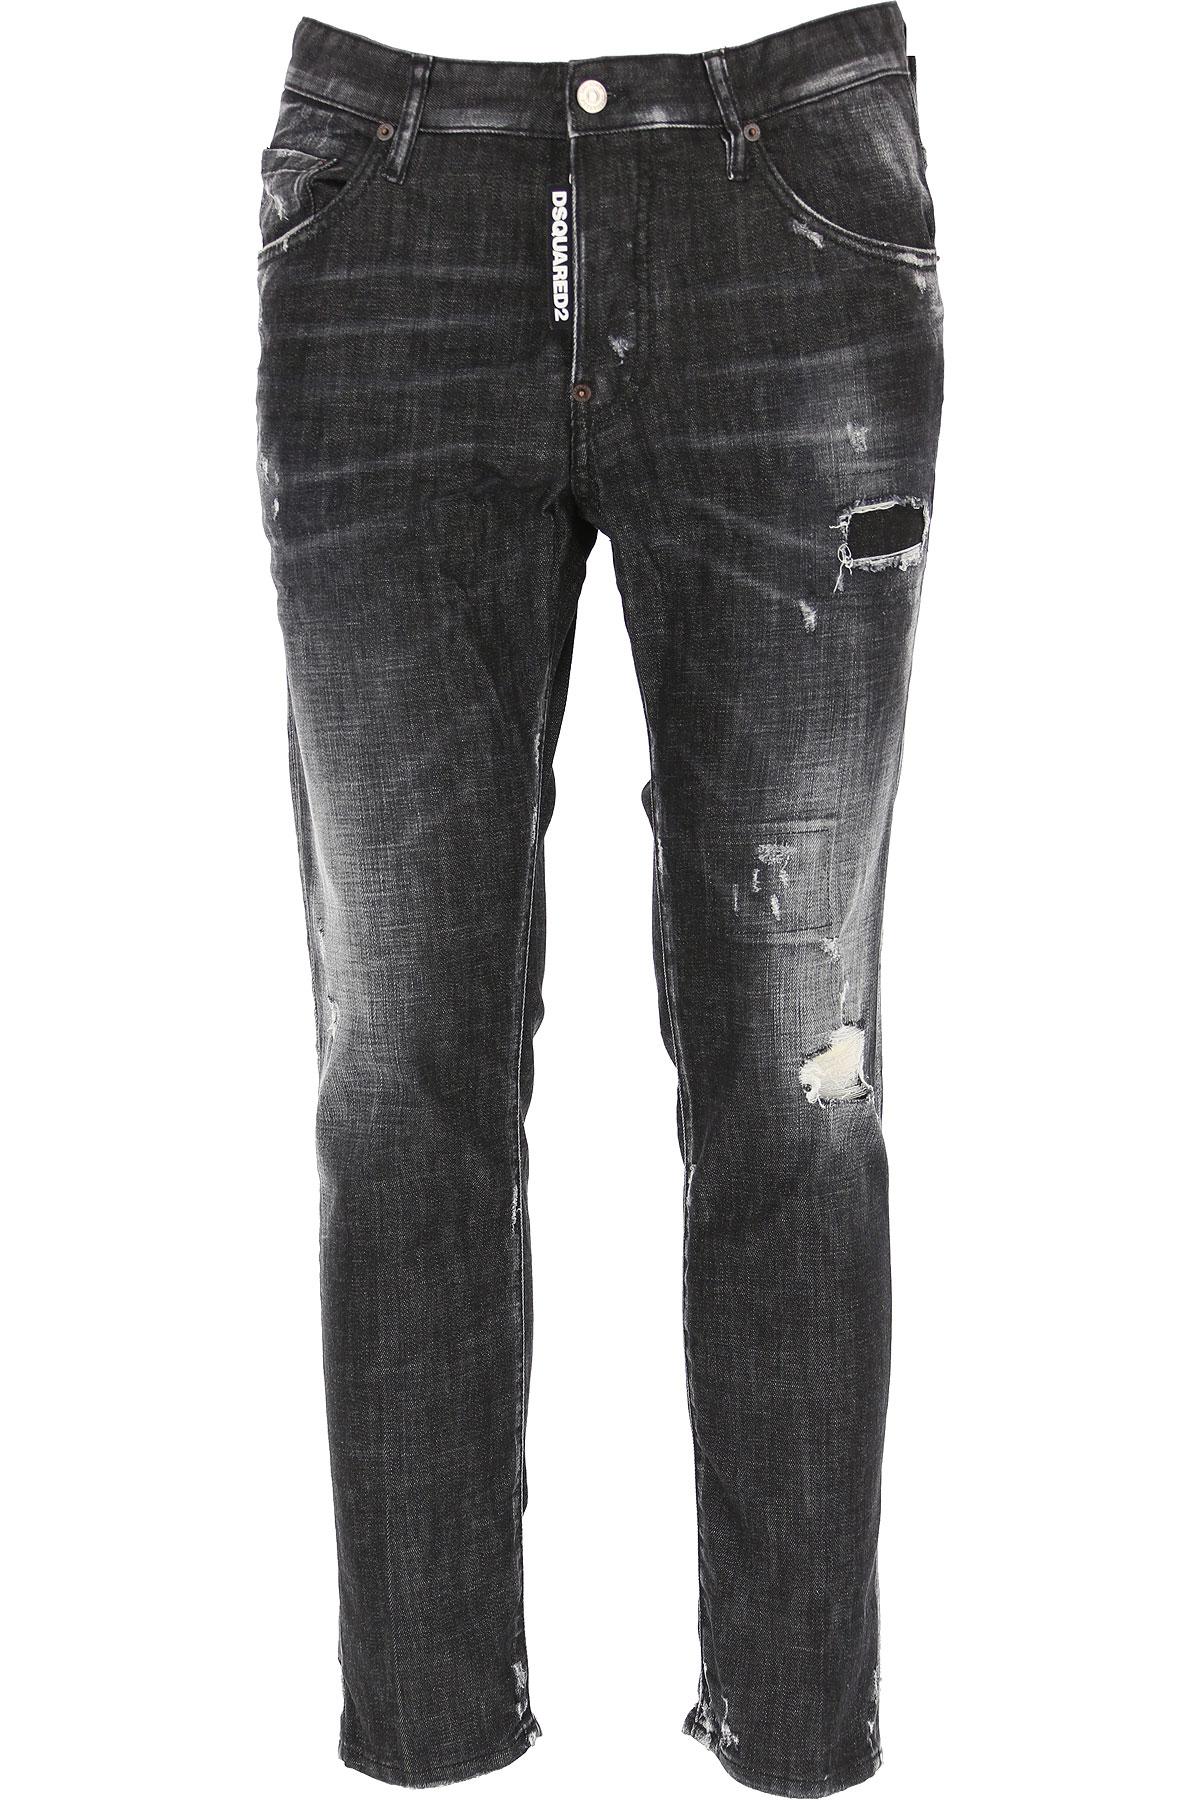 DSquared² Denim Jeans in Nero (Black) for Men - Save 6% - Lyst